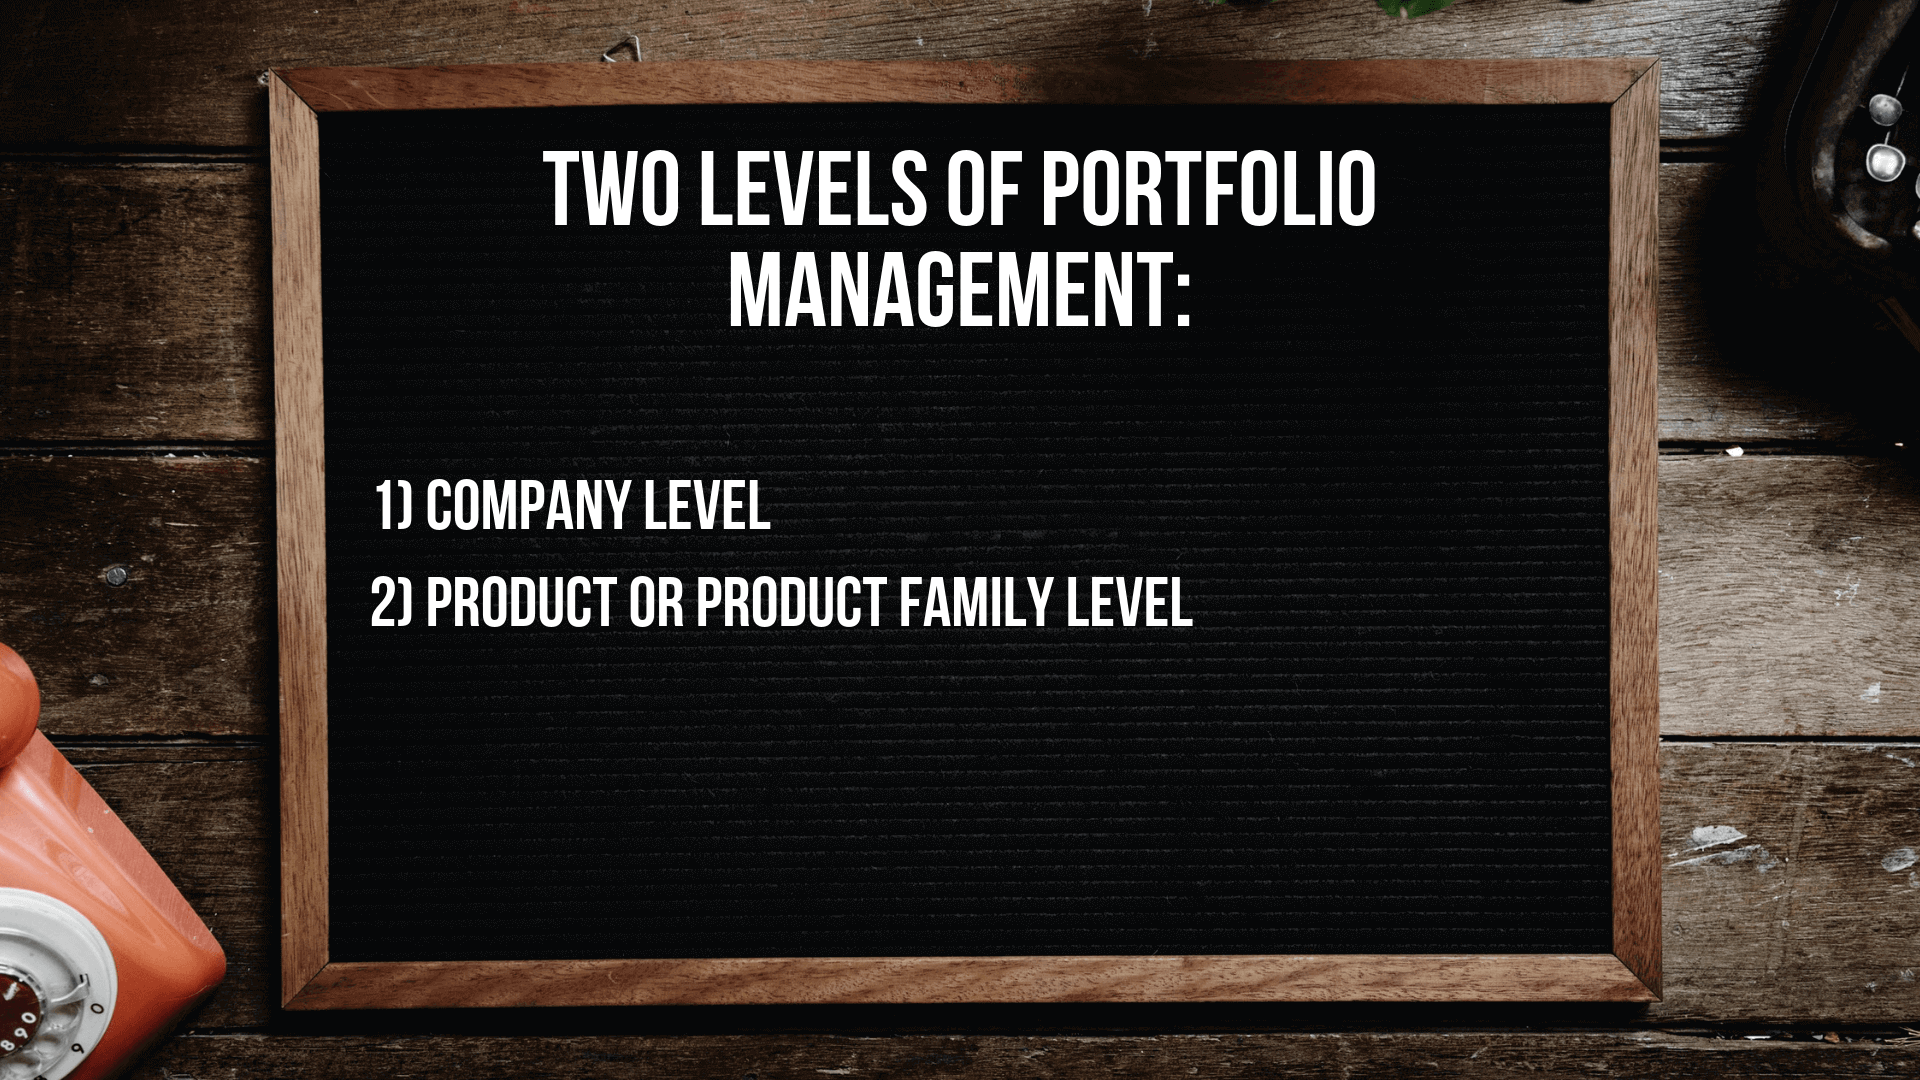 Two levels of portfolio management